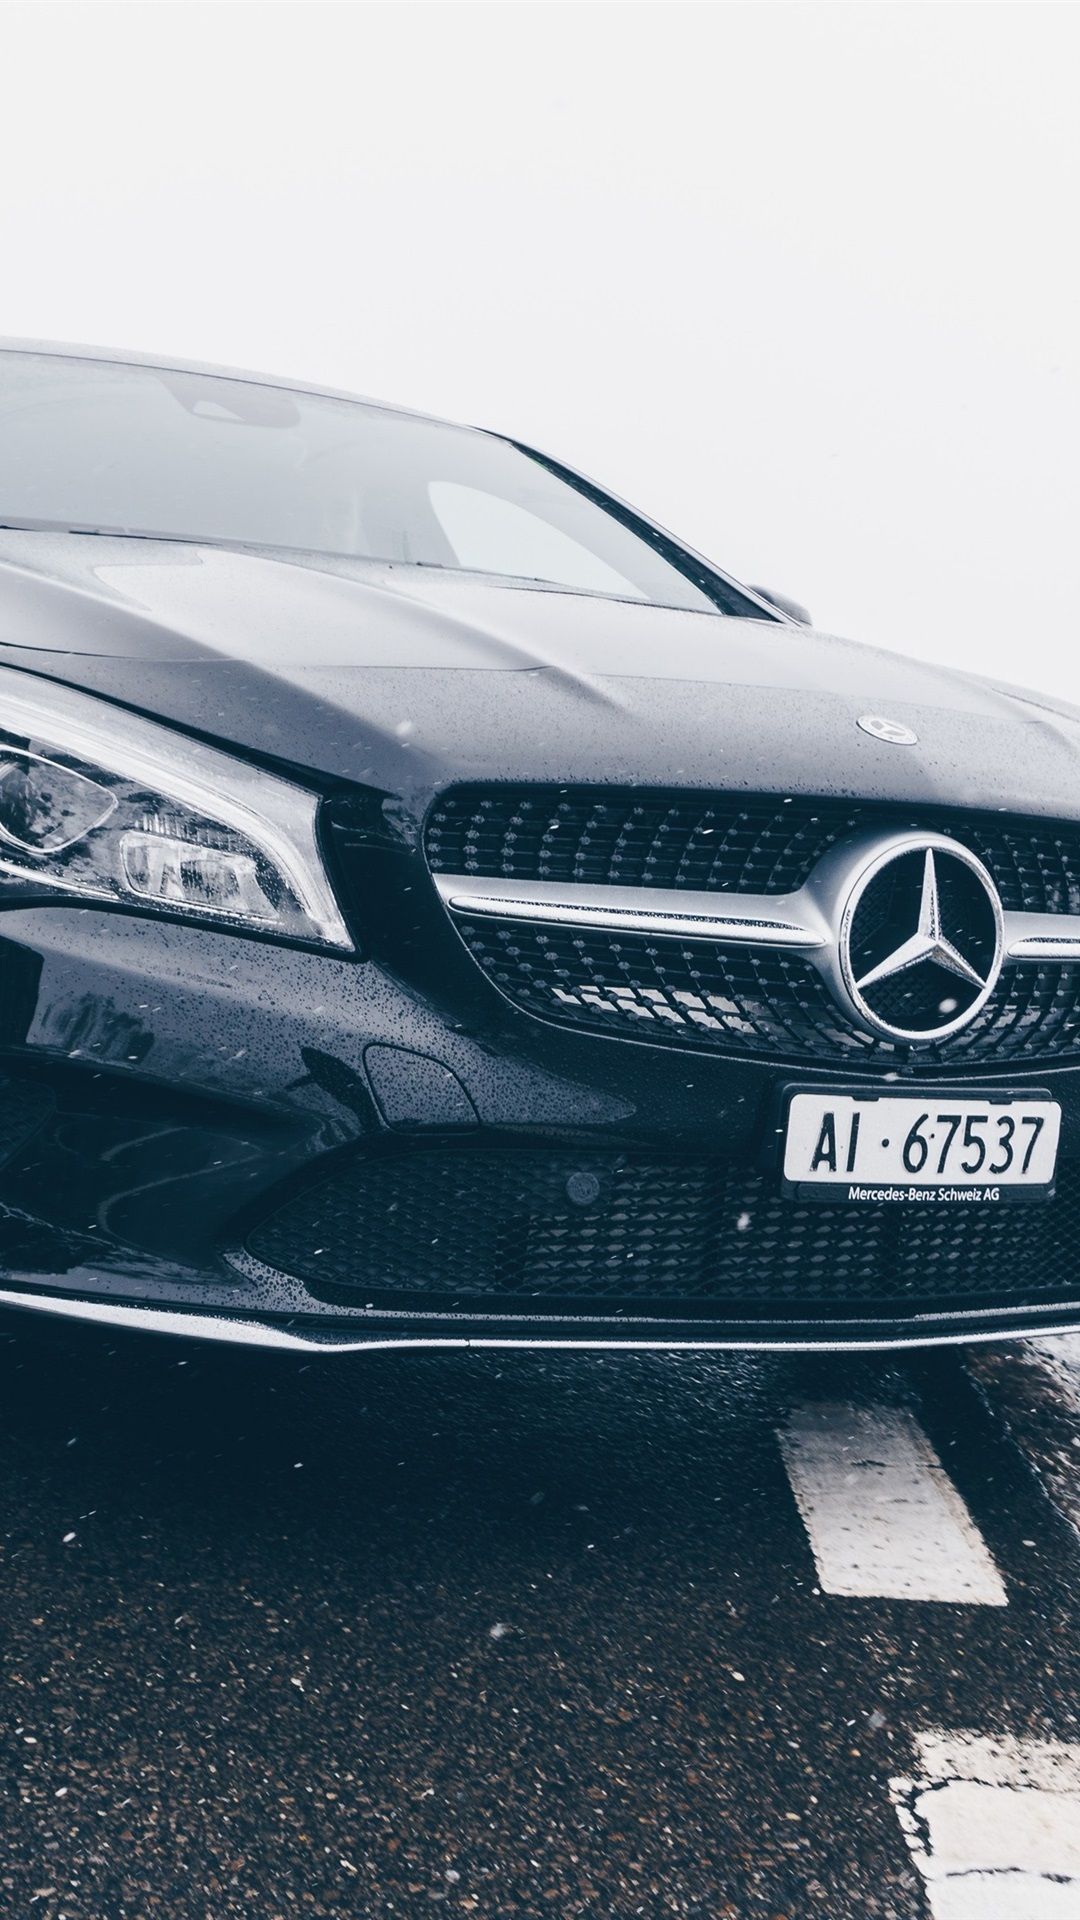 Mercedes Benz Black Car Front View, Headlight, Rain 1080x1920 IPhone 8 7 6 6S Plus Wallpaper, Background, Picture, Image